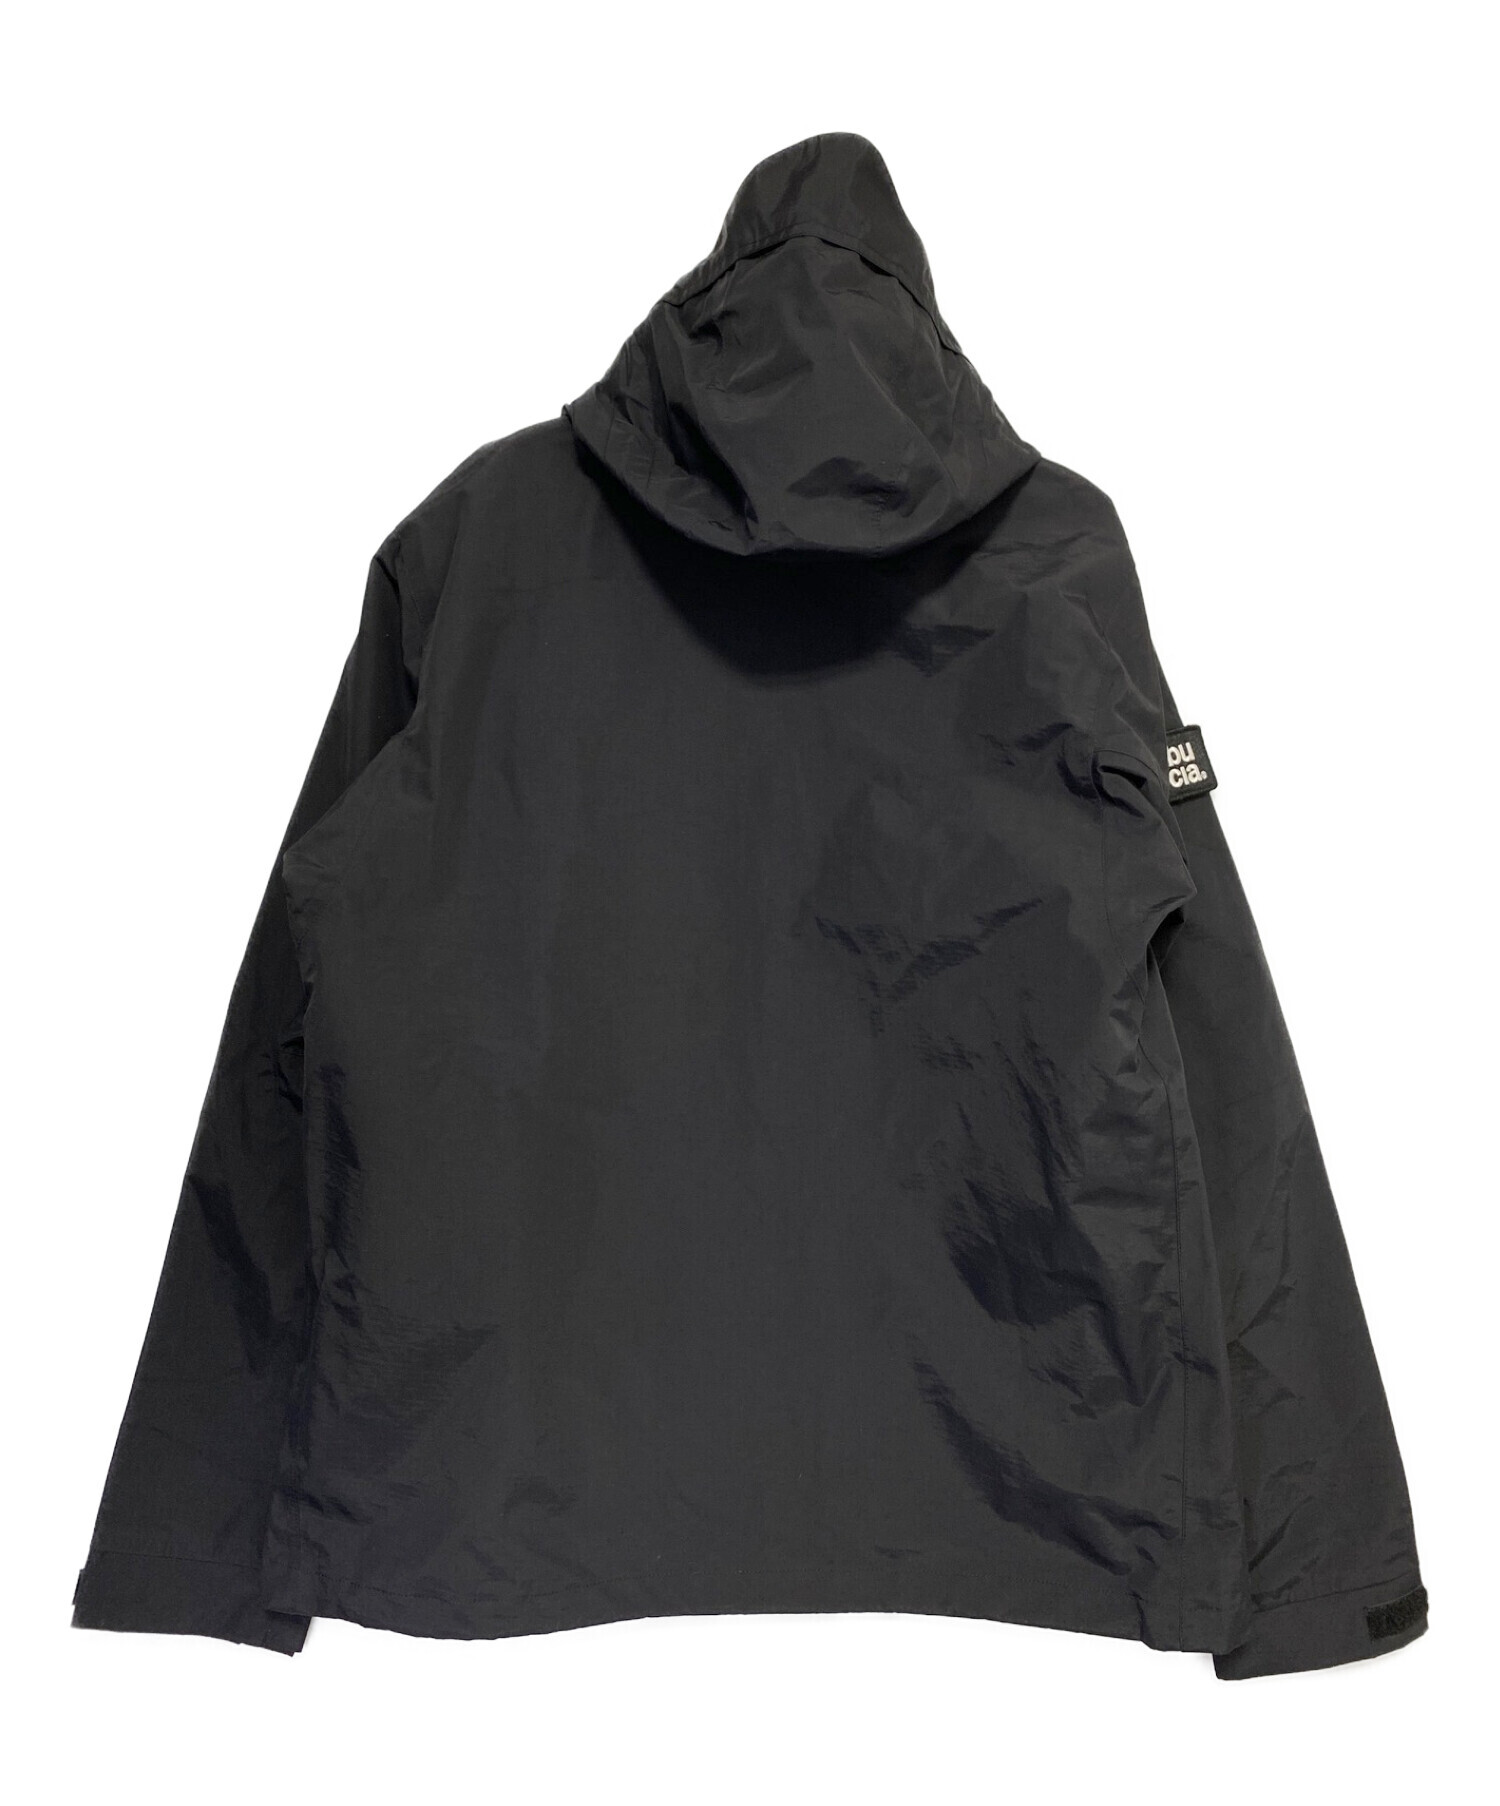 Abu Garcia (アブガルシア) ウォータープルーフジャケット ブラック サイズ:XL